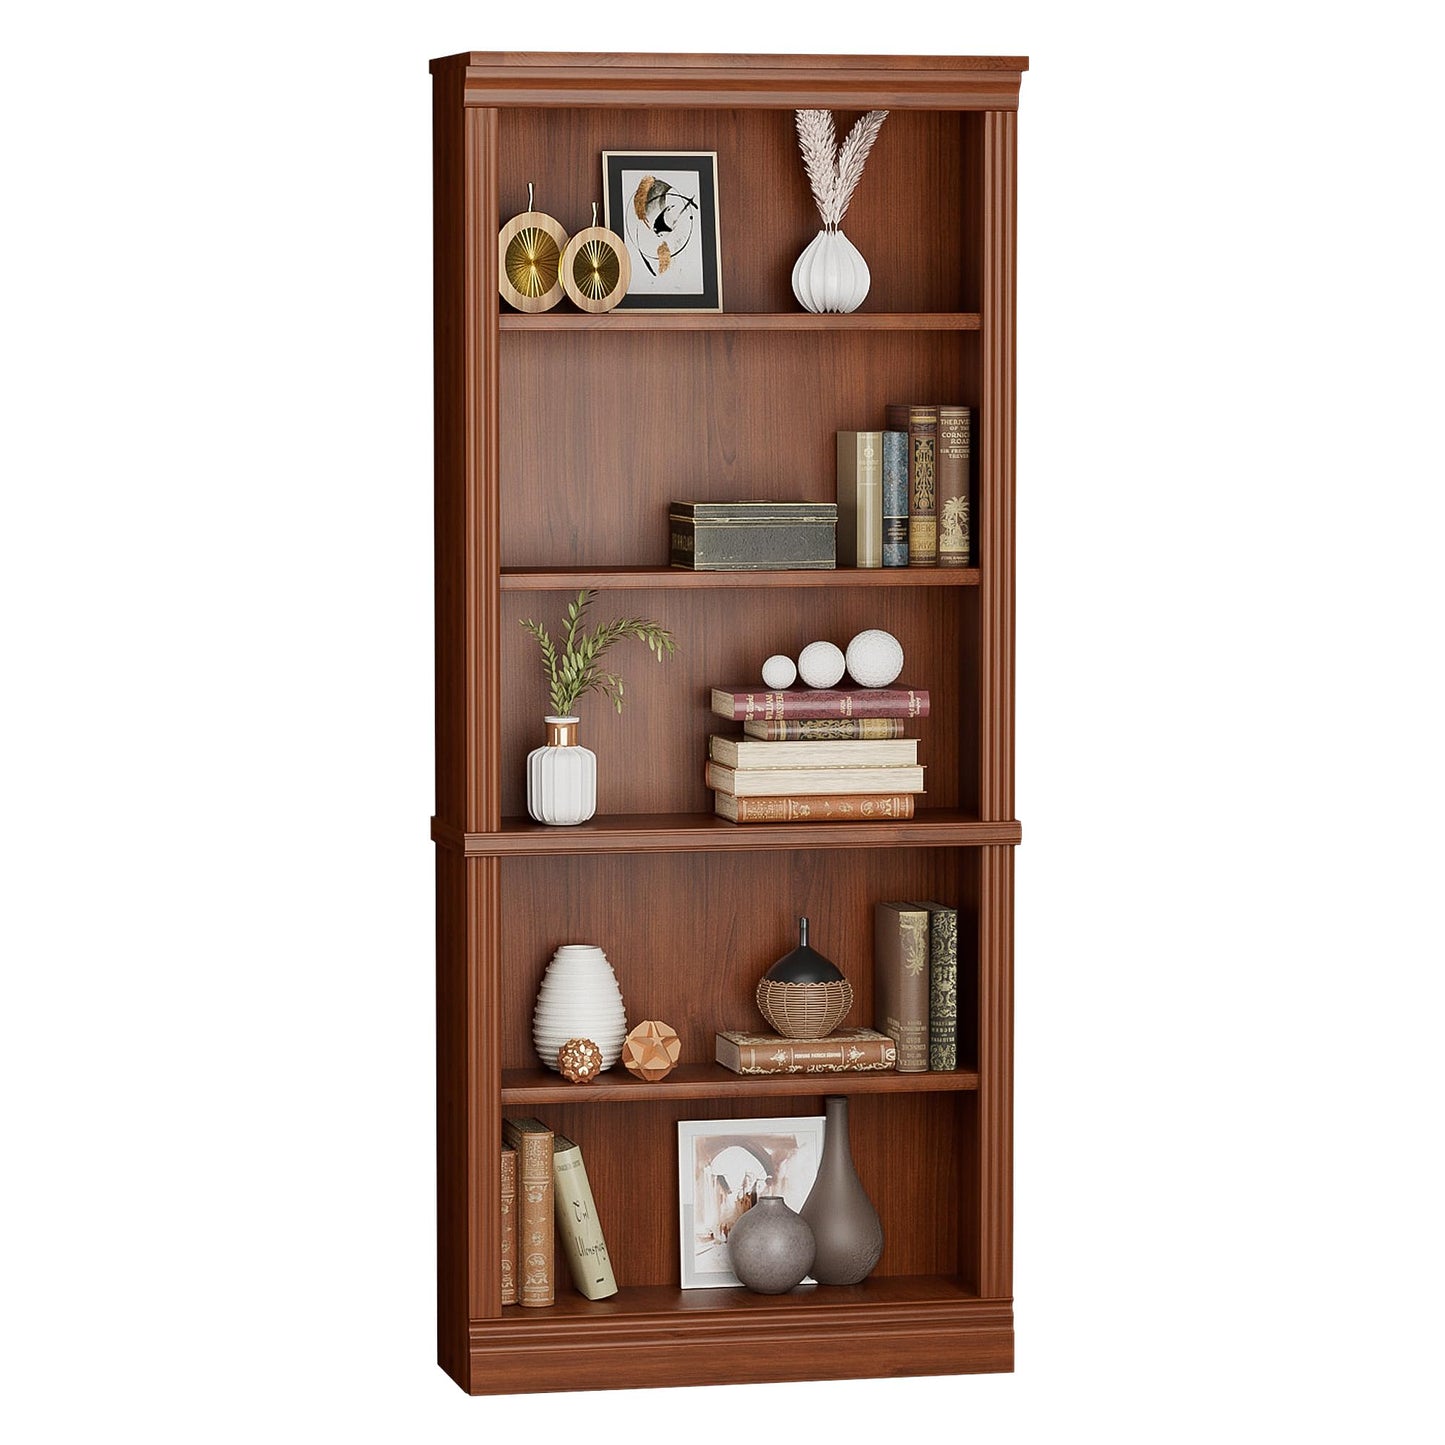 Furniwell Bookcase Bookshelves, 5-Shelf Tall Bookcase 72" Wood Open Display Floor Bookshelf, Large Storage Organizer for Library, Bedroom, Living Room (Cherry)